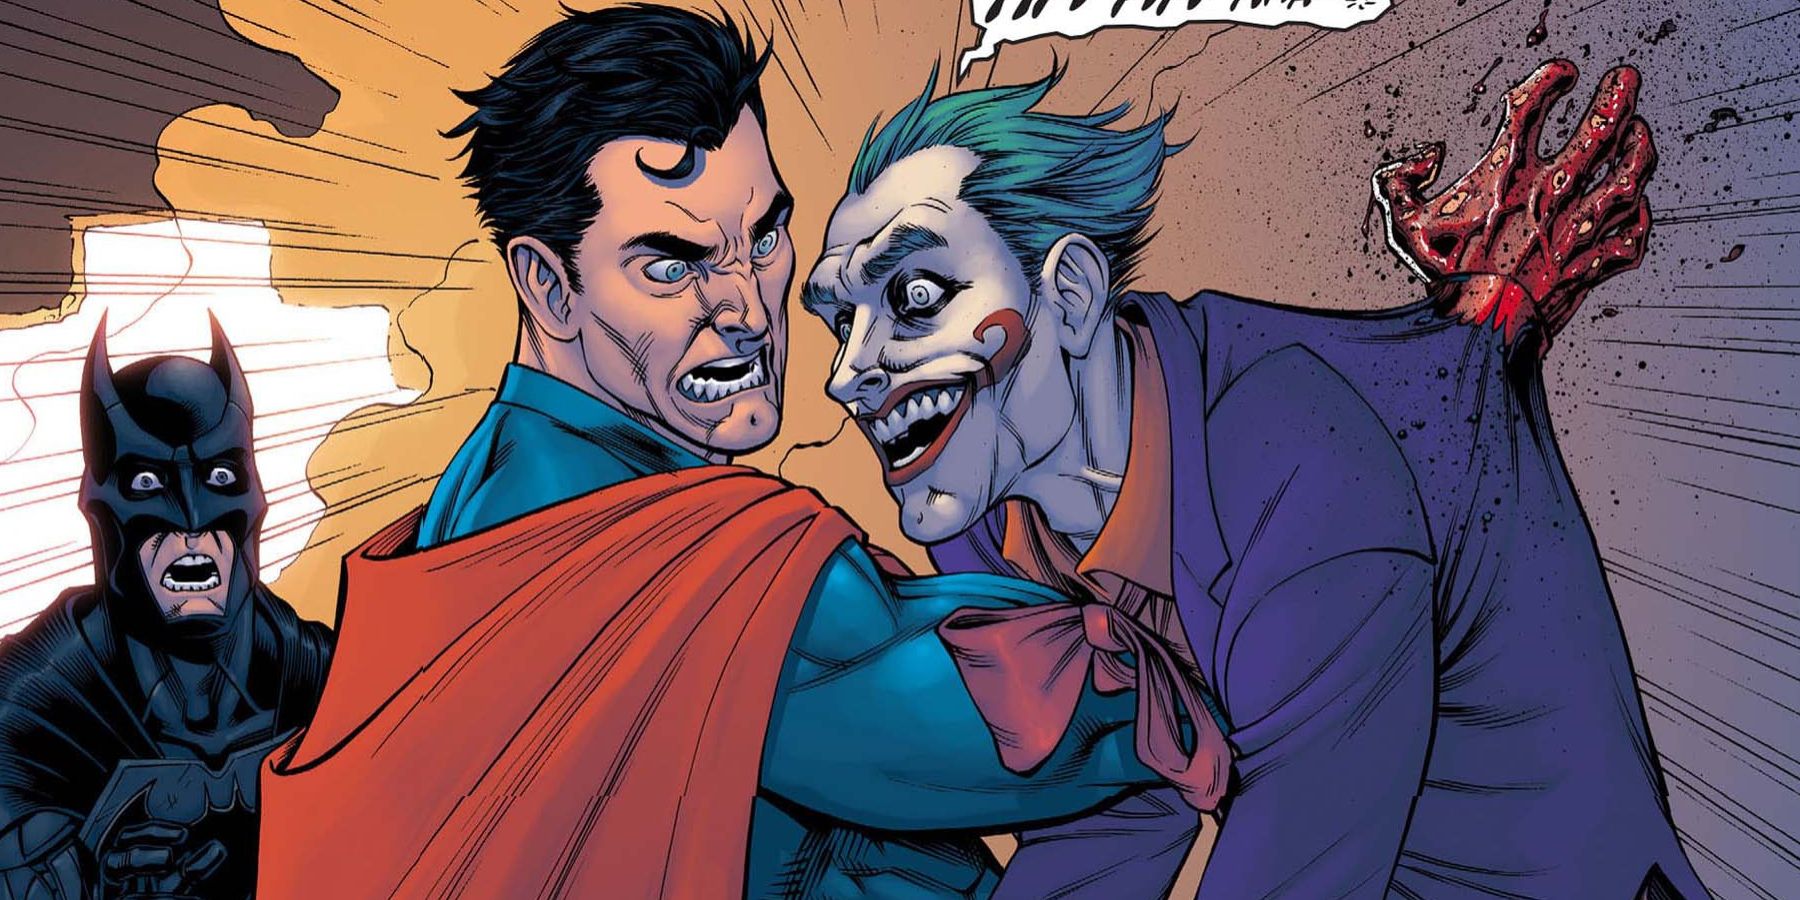 Injustice Superman killing Joker, Batman looks horrified in the background.